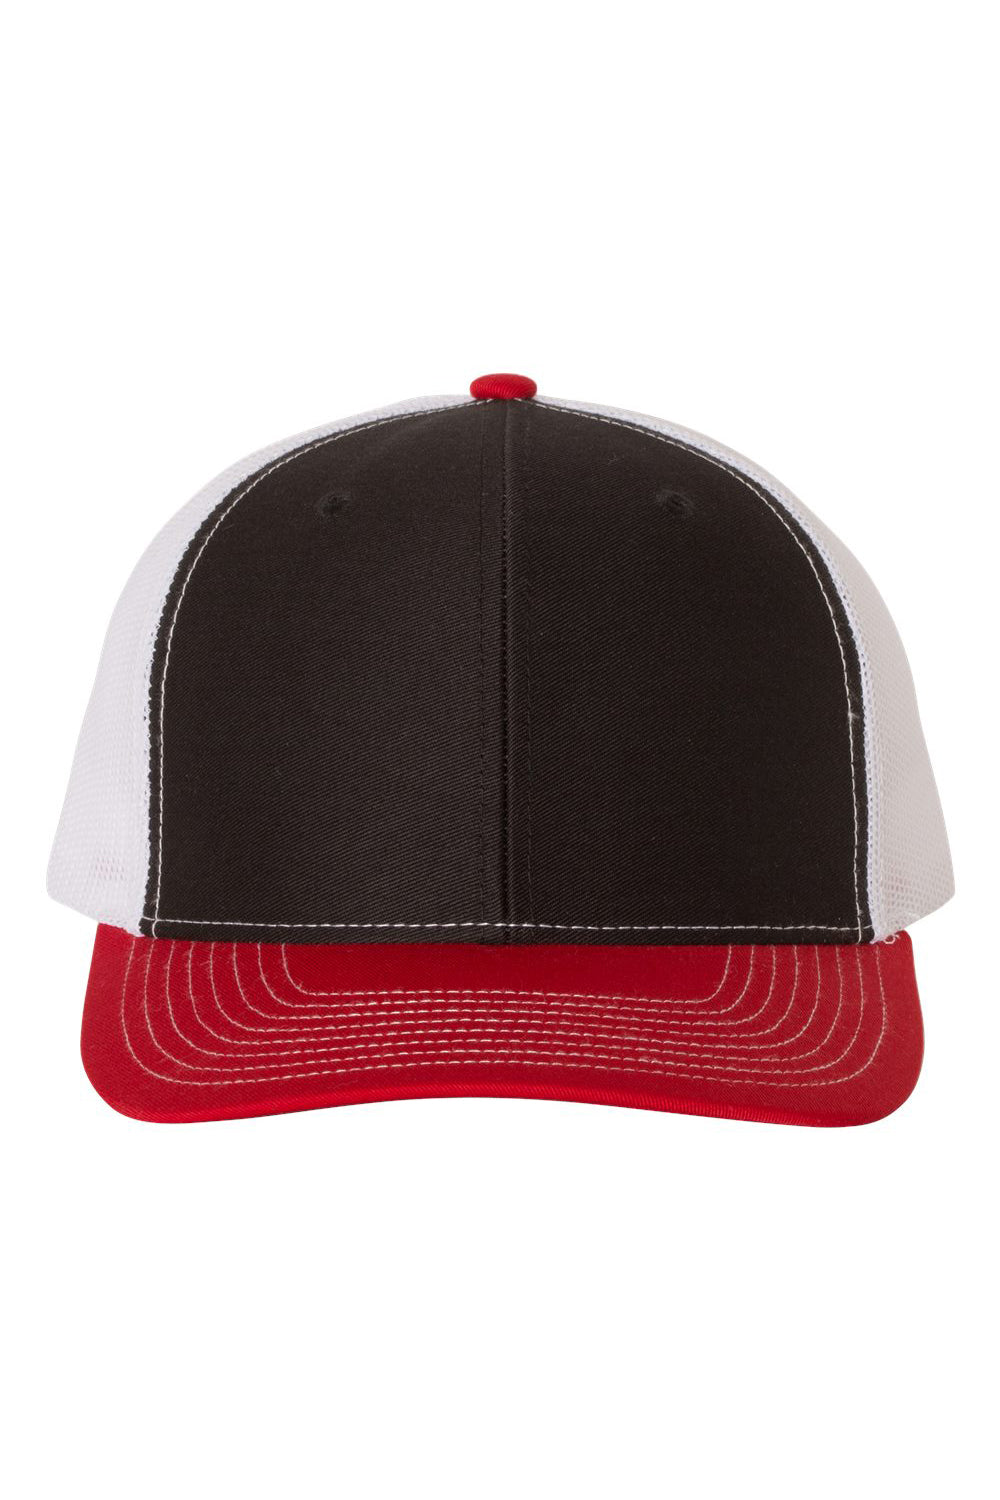 Richardson 112 Mens Snapback Trucker Hat Black/White/Red Flat Front